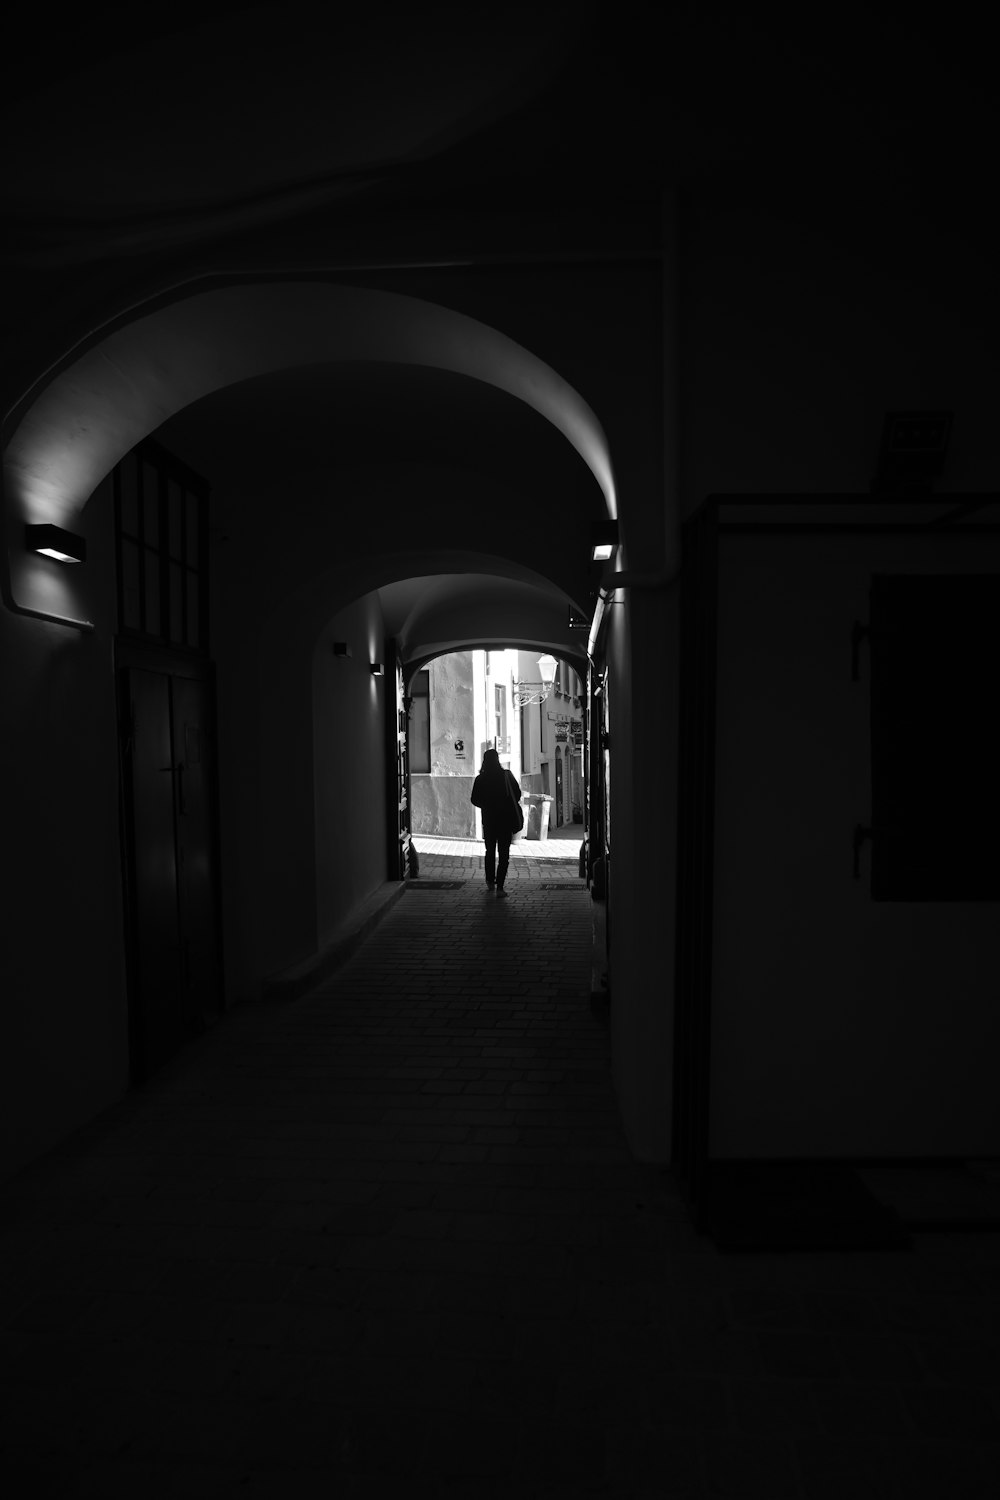 a person is walking down a dark hallway